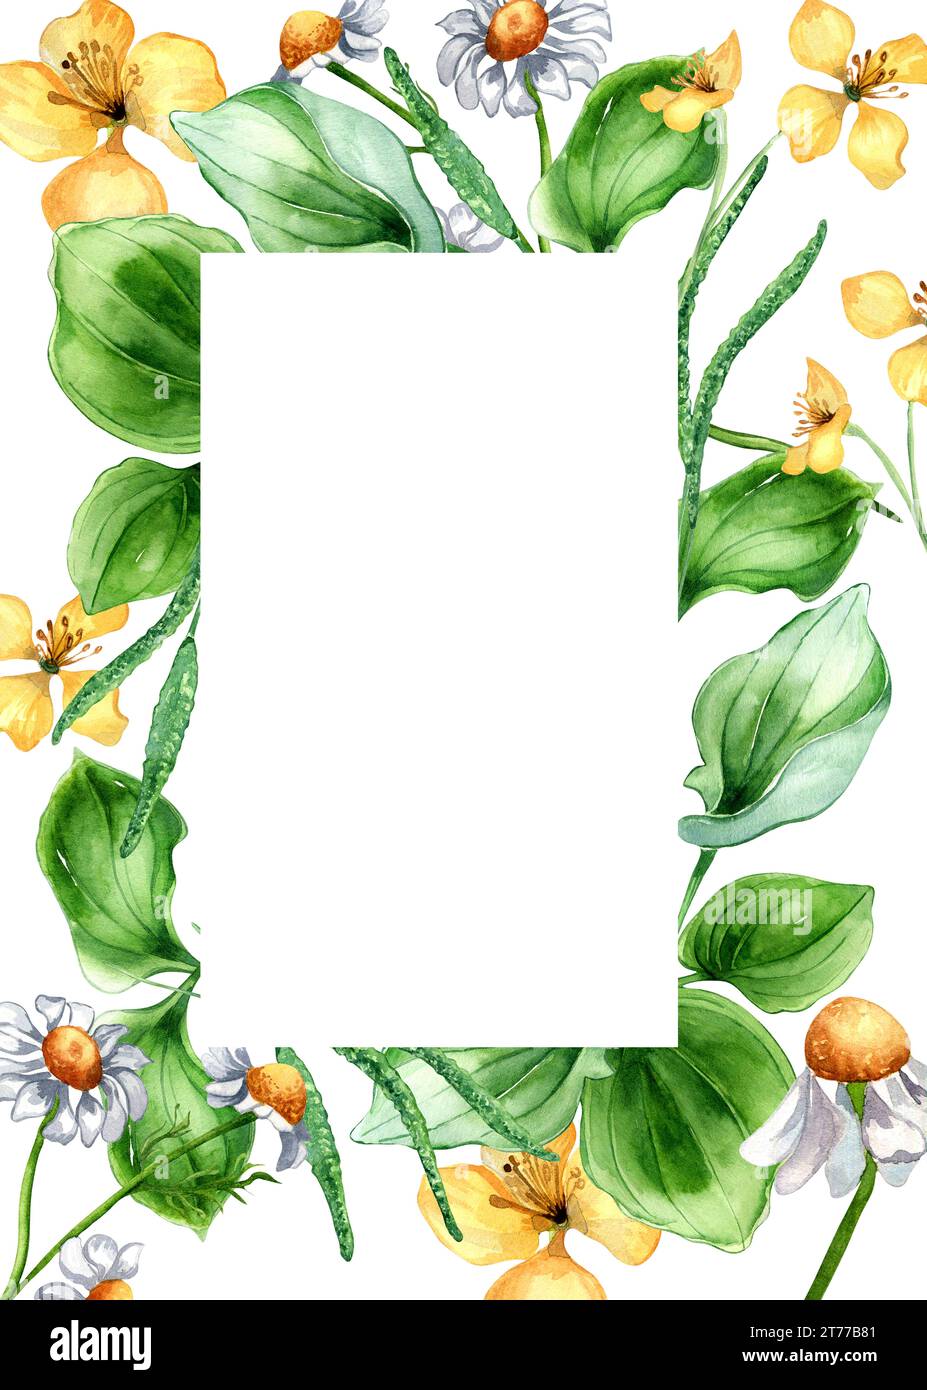 Frame of plantago broadleaf, celandine plants watercolor illustration isolated on white background. Plantain, chamomile, herb, psyllium hand drawn. De Stock Photo